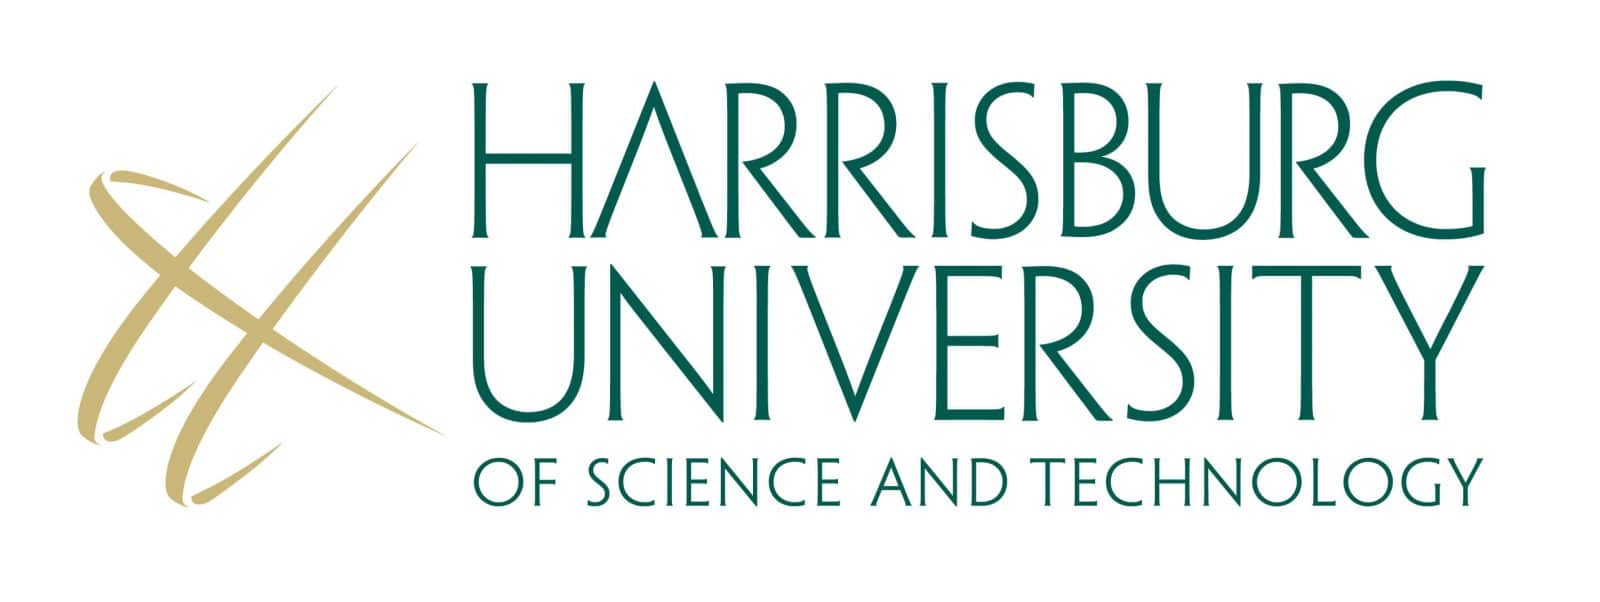 harrisburg University logo